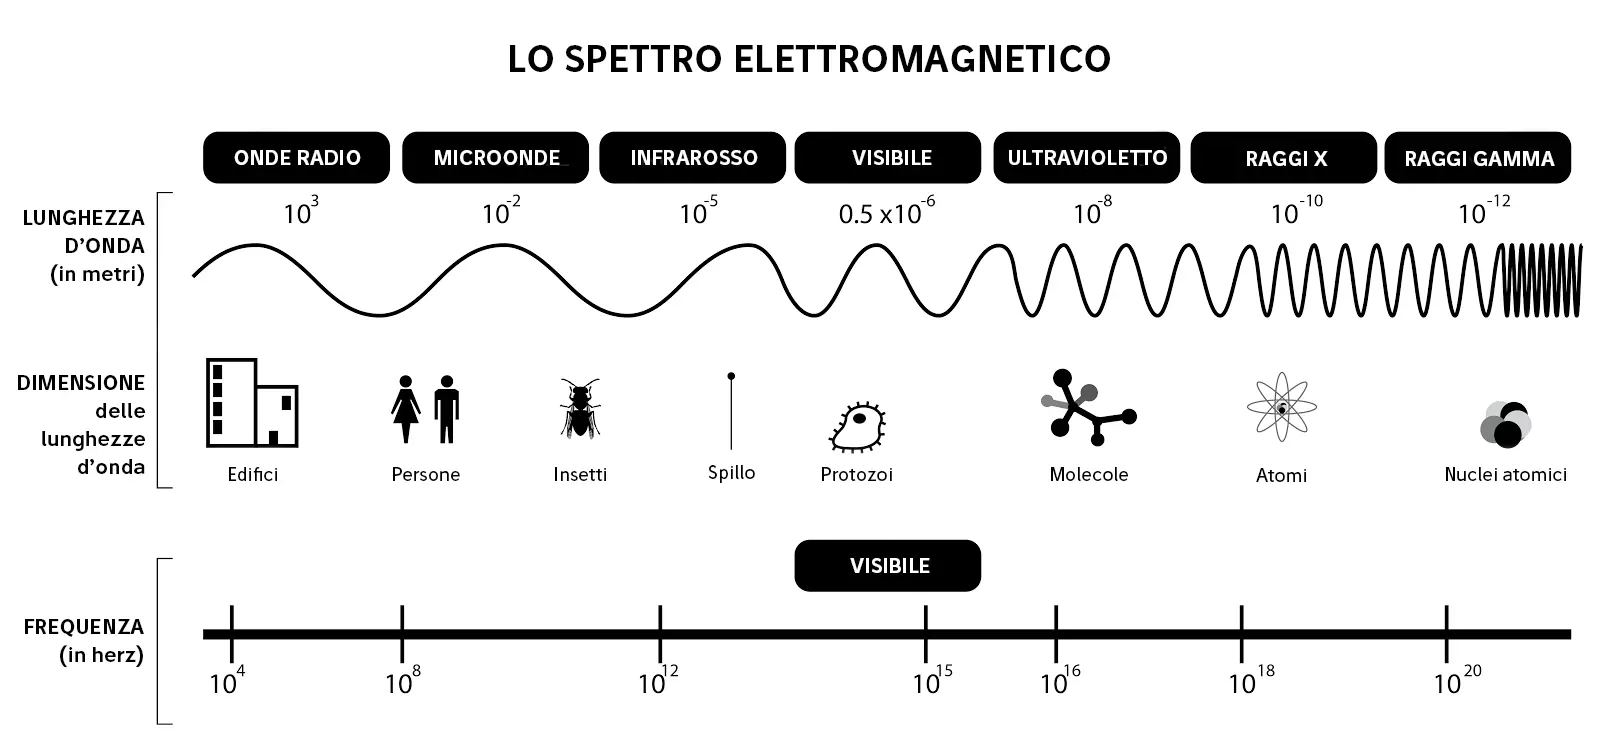 Spettro elettromagnetico.png